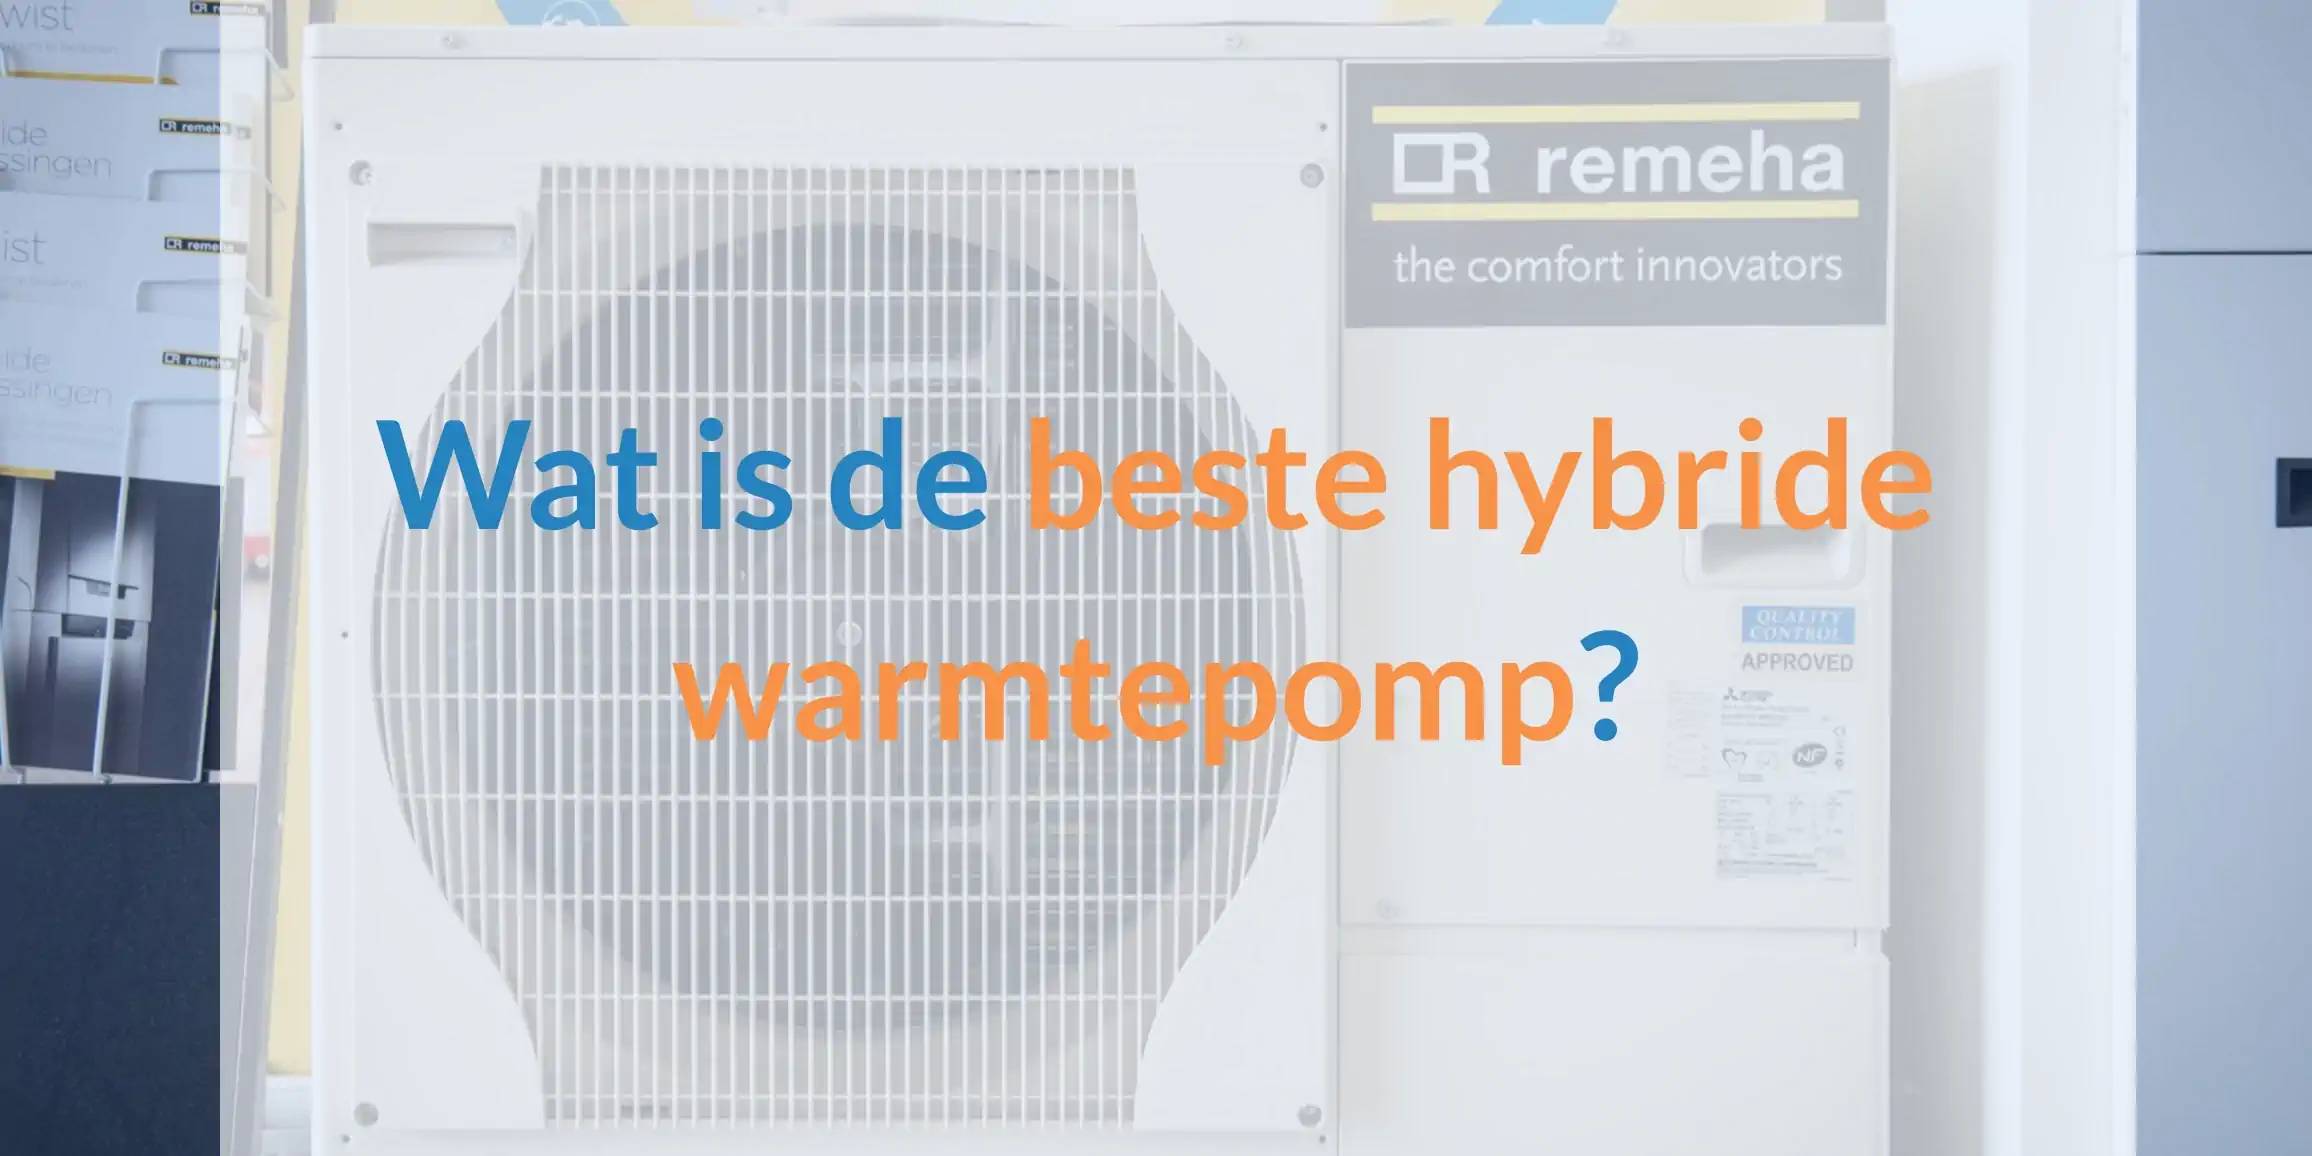 Wat is de beste hybride warmtepomp?